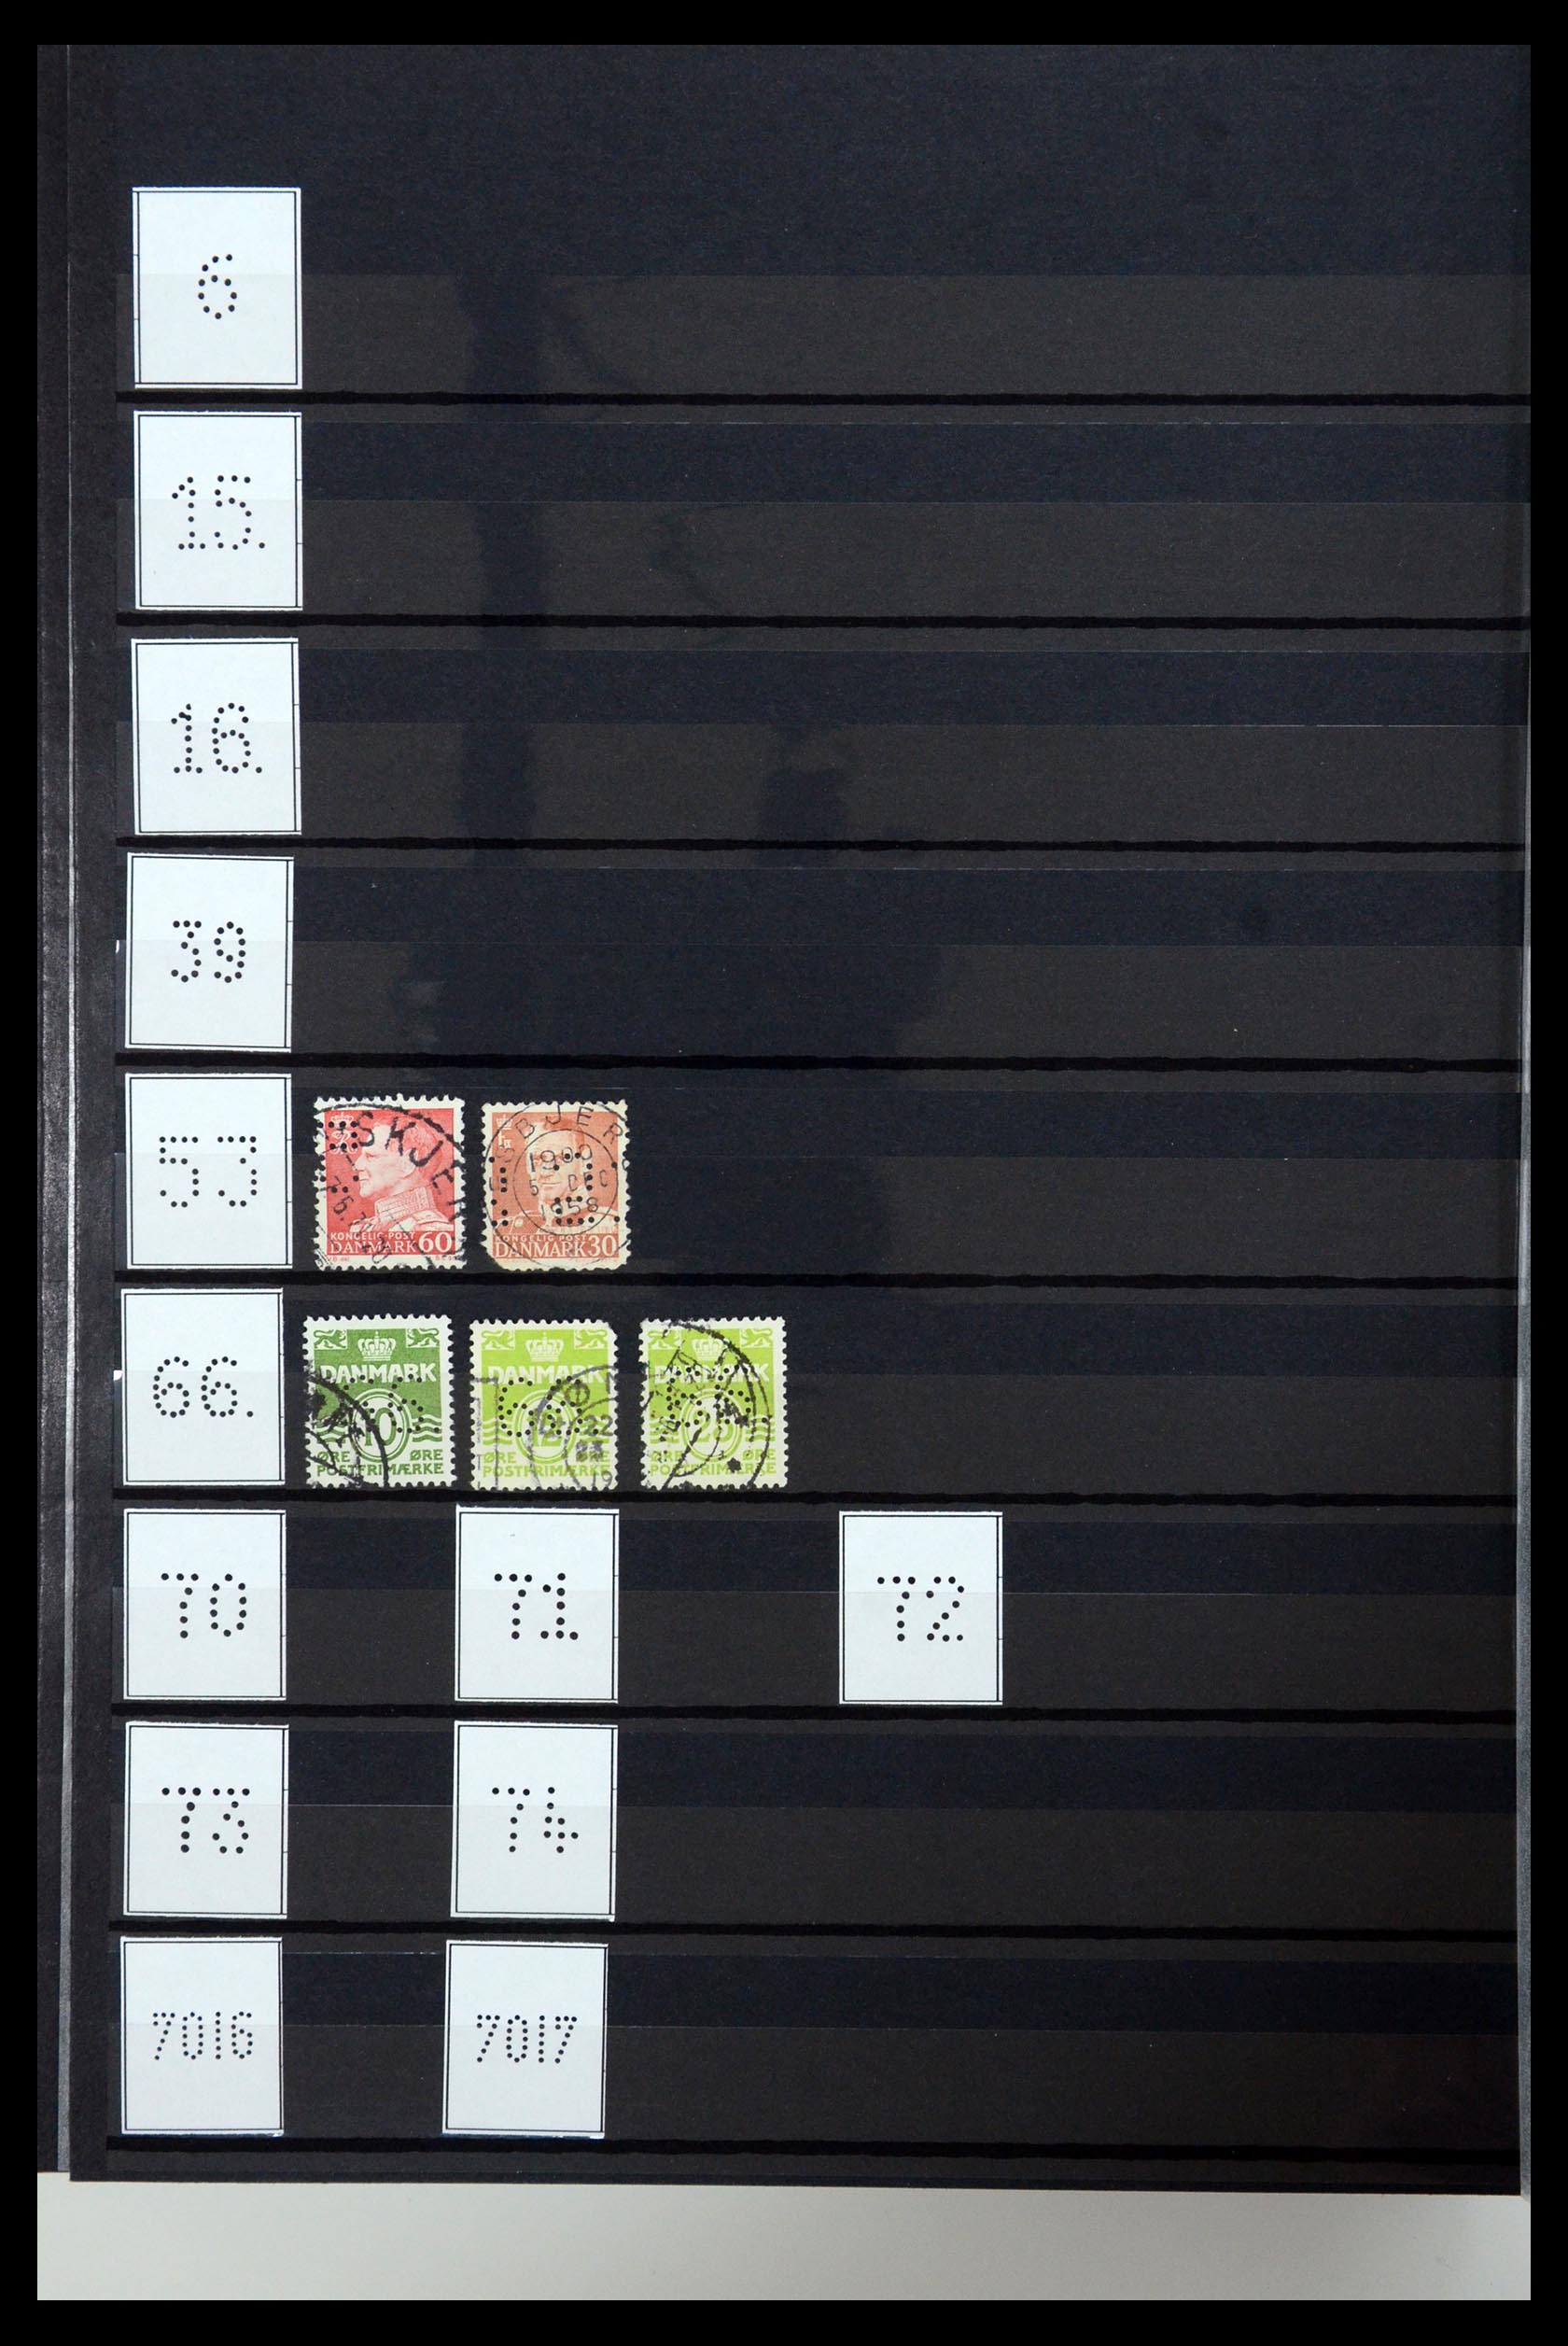 36396 228 - Stamp collection 36396 Denmark perfins.